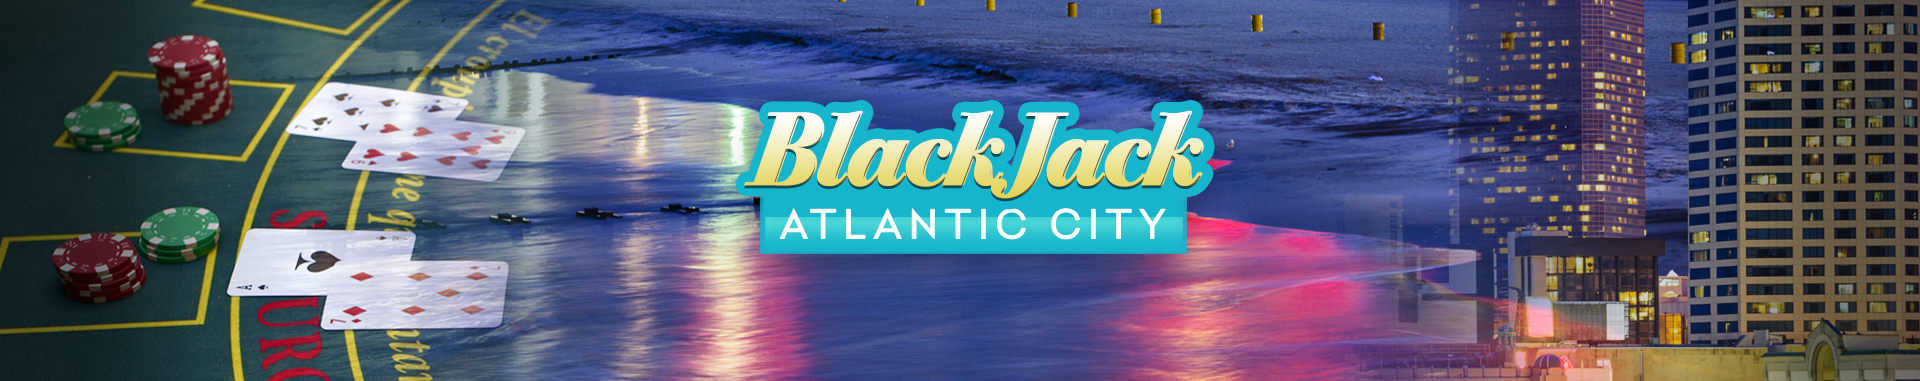 Blackjack GoldSeries Atlantic City